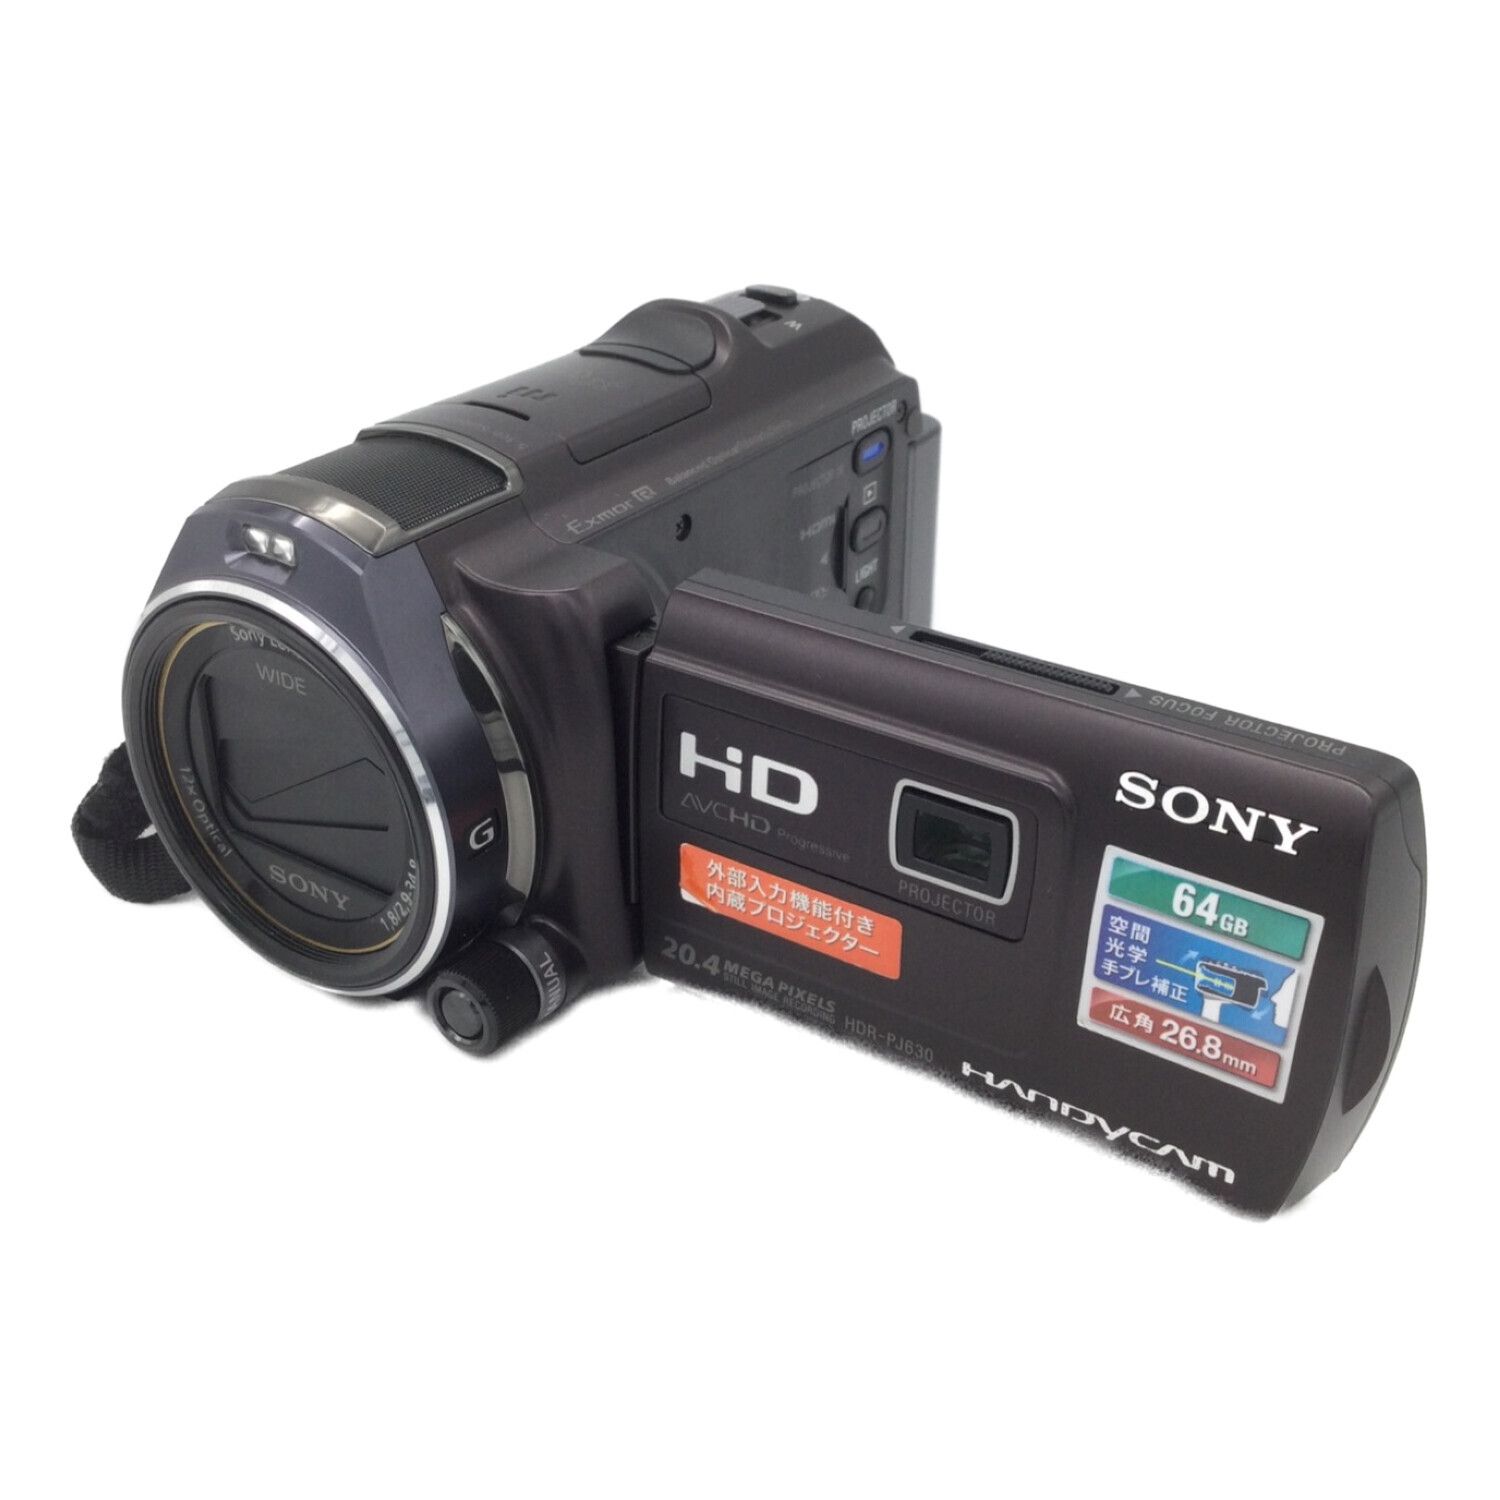 SONY HDR-PJ630Vビデオカメラ